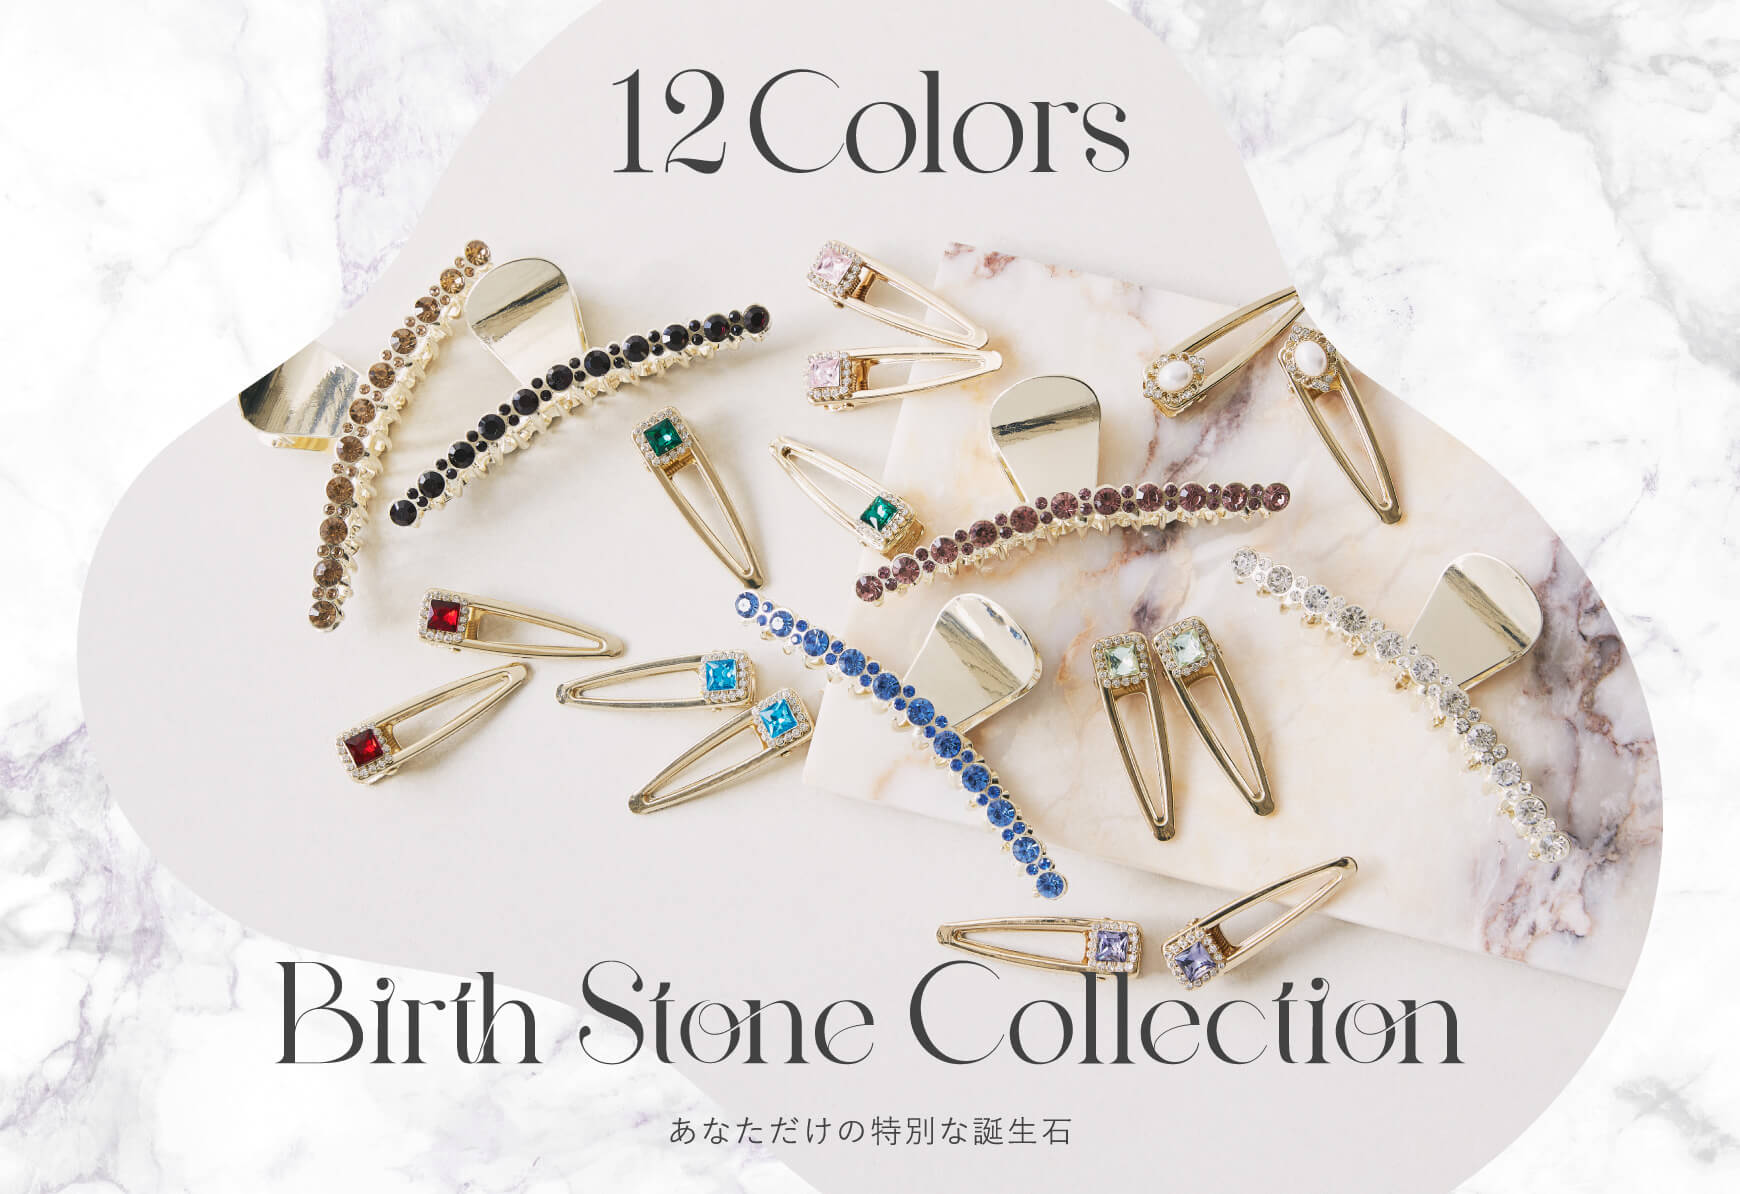 12Colors Birth Stone Collection あなただけの特別な誕生石